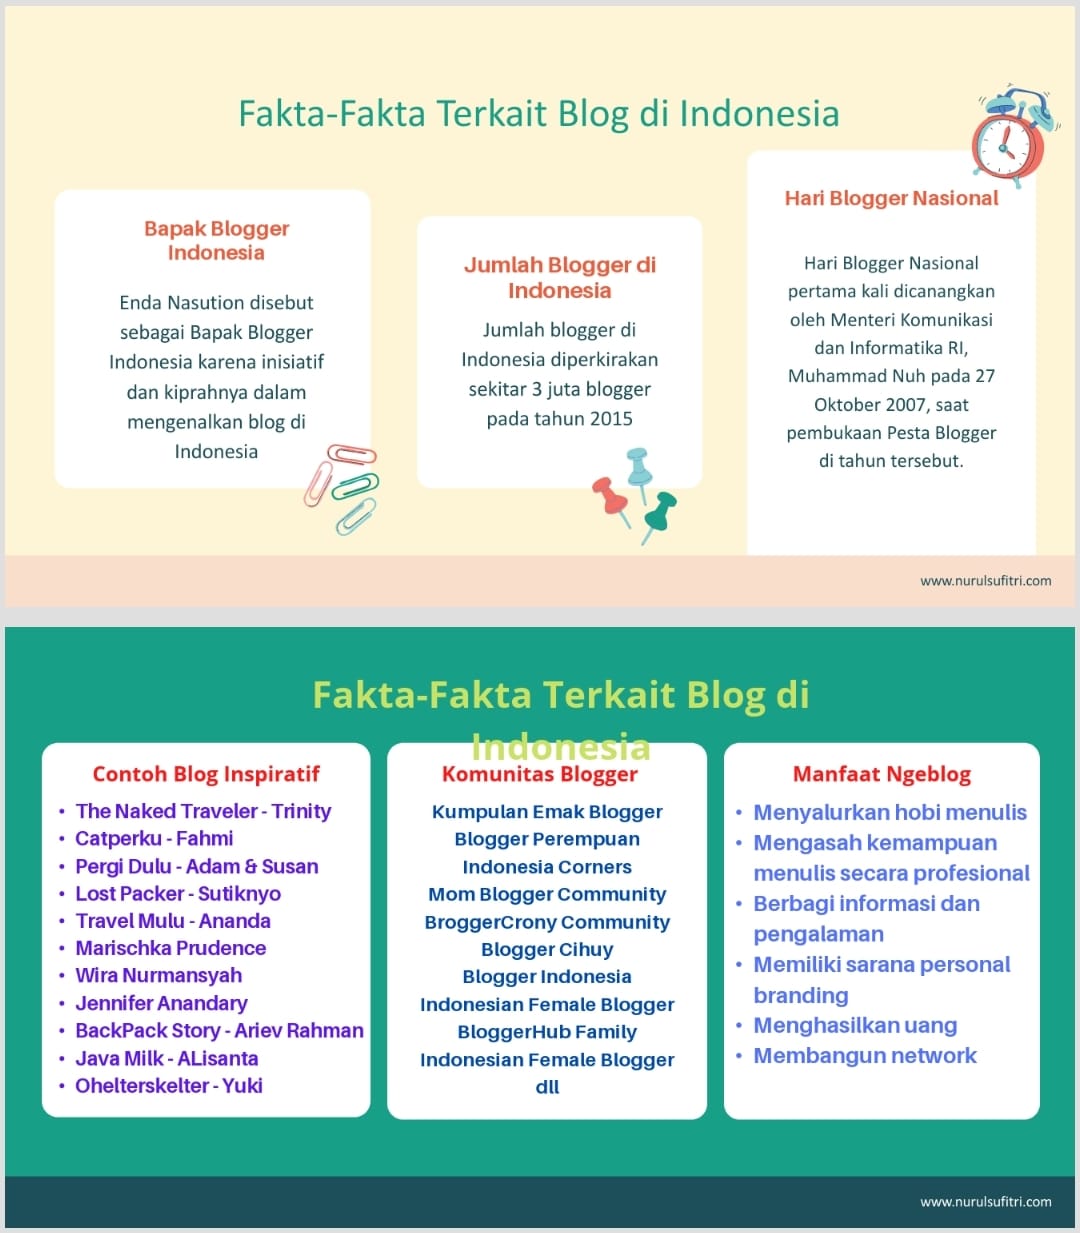 101 About Blog and Microblog Techminar Kreen Indonesia Nurul Sufitri Travel Lifestyle